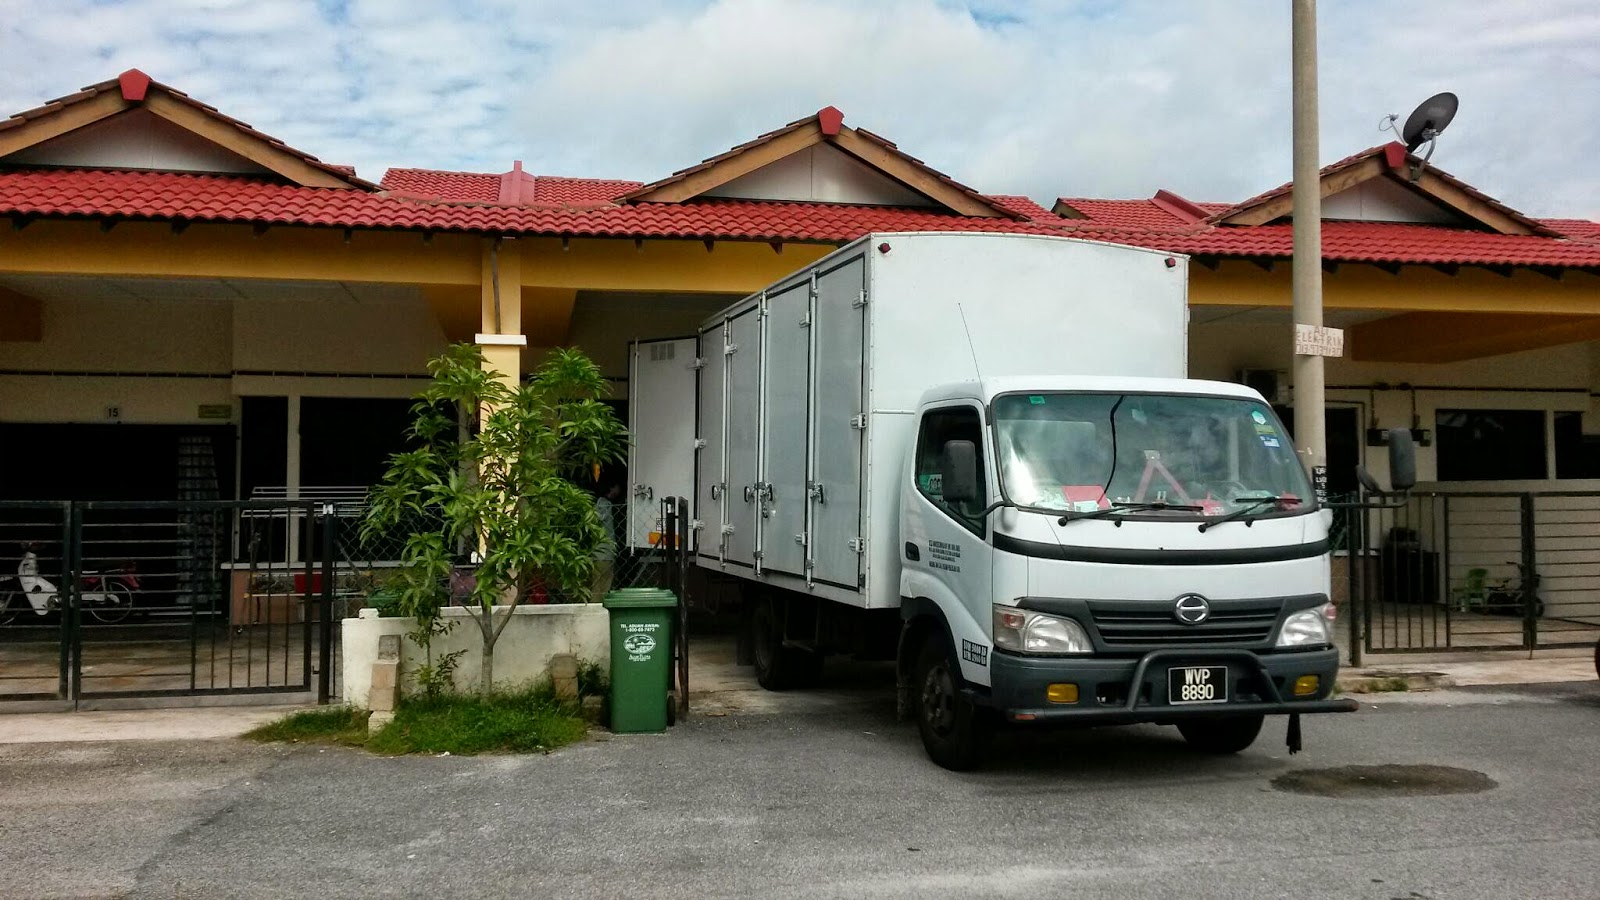 Rumah Sewa Murah Selangor - Republika RSS